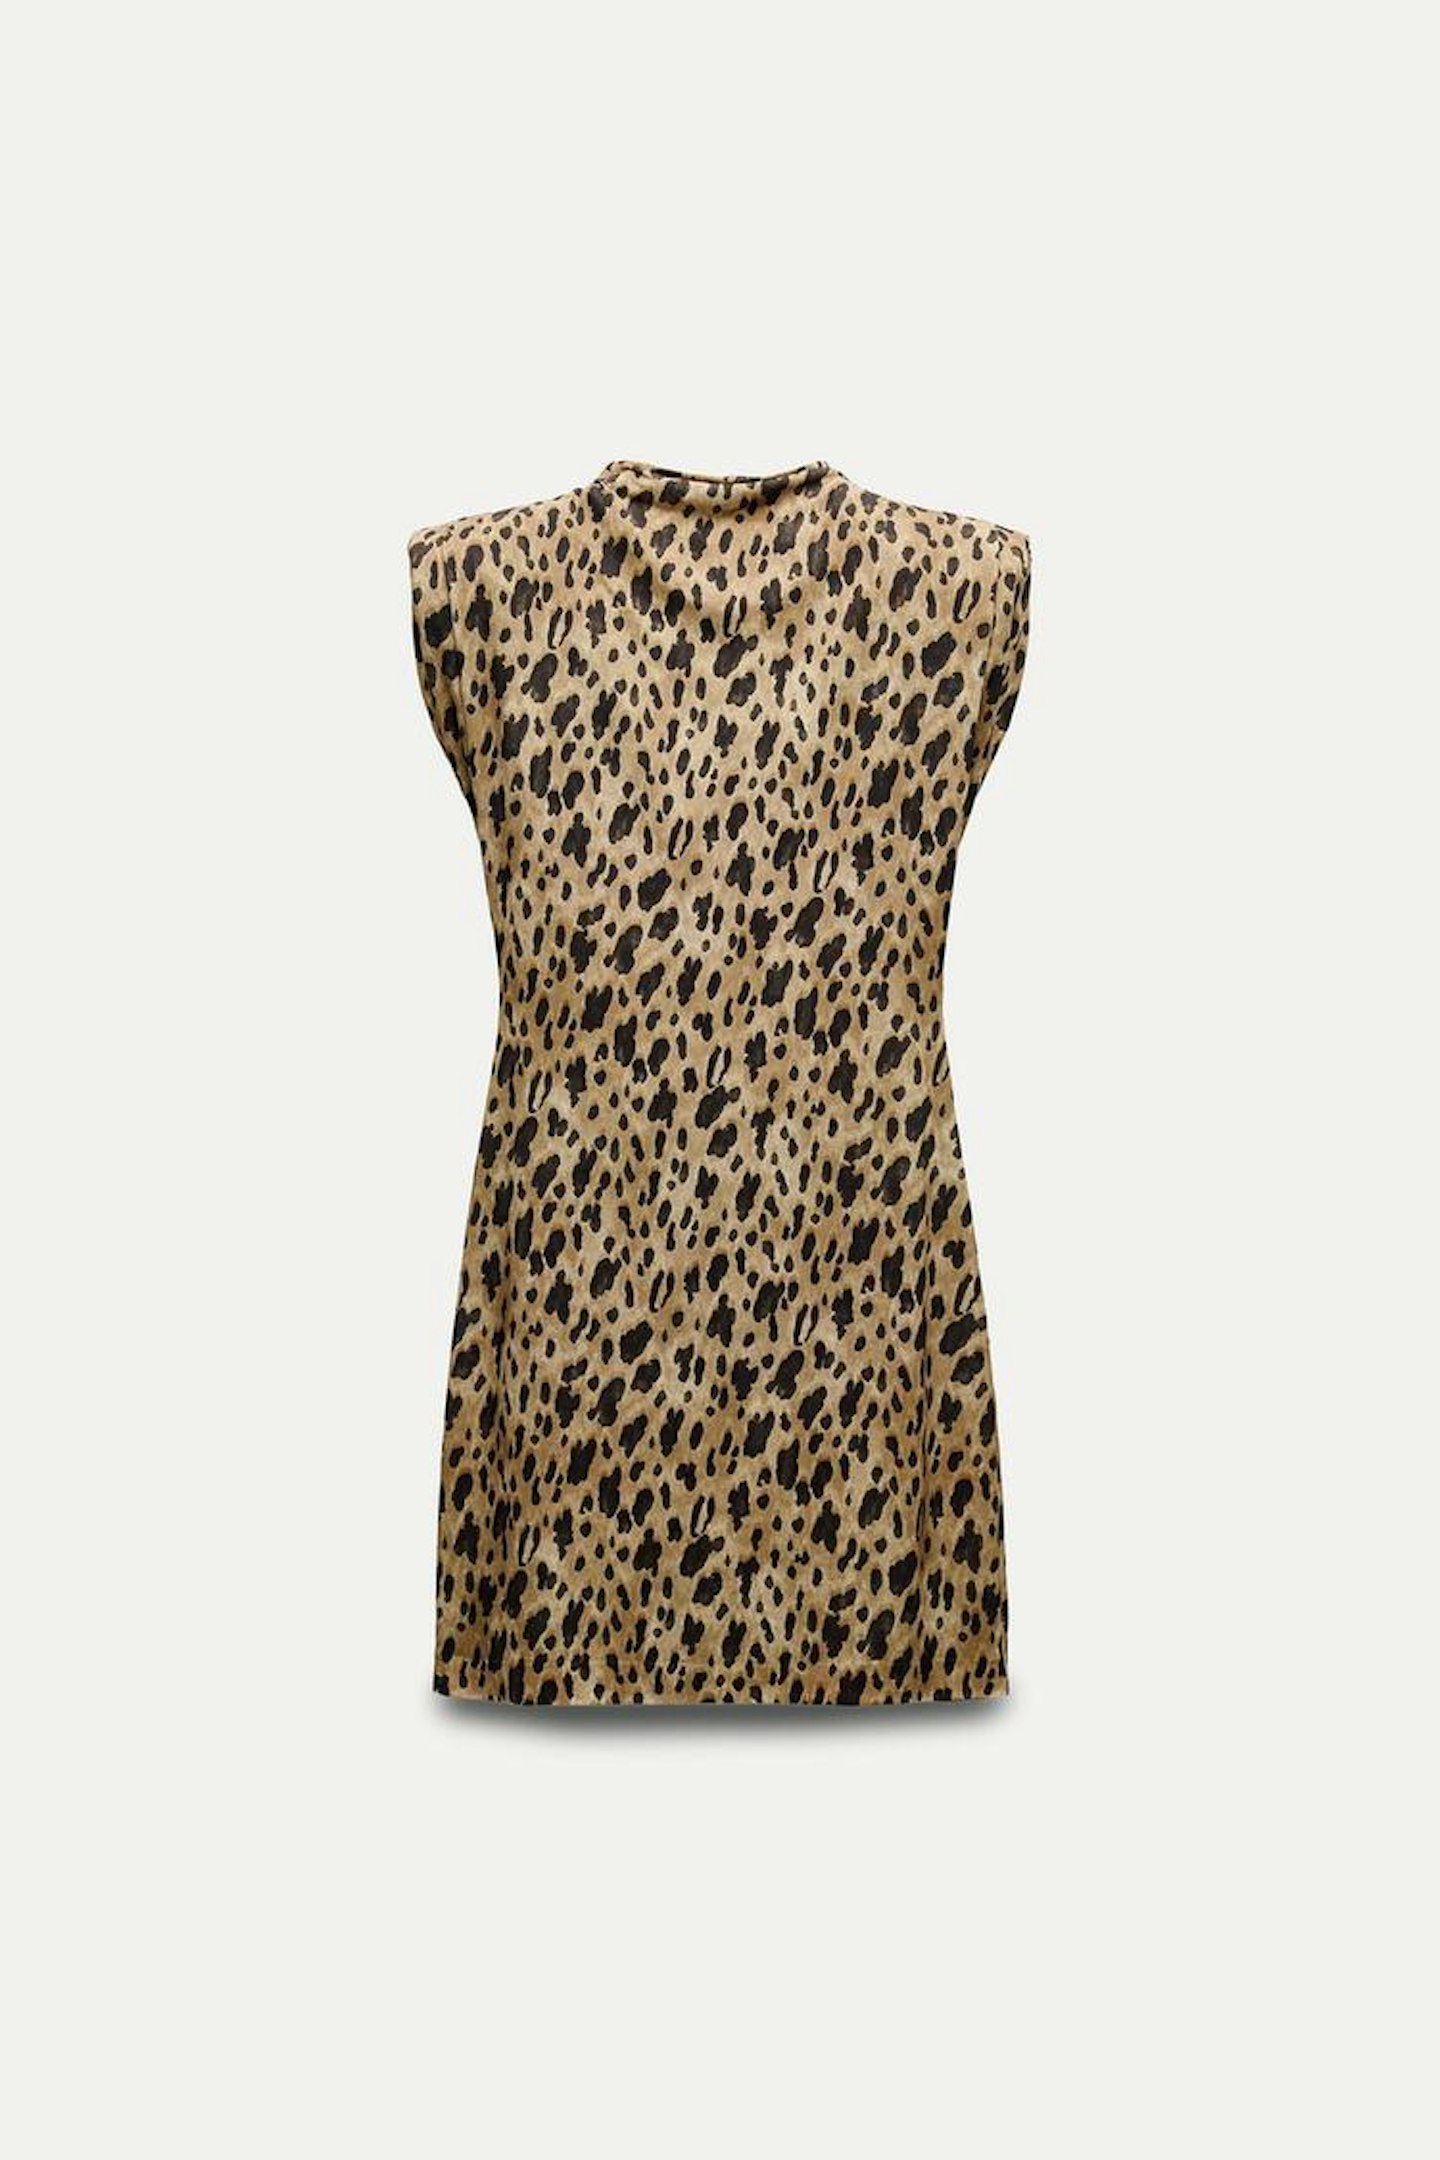 Zara, Animal Print Dress